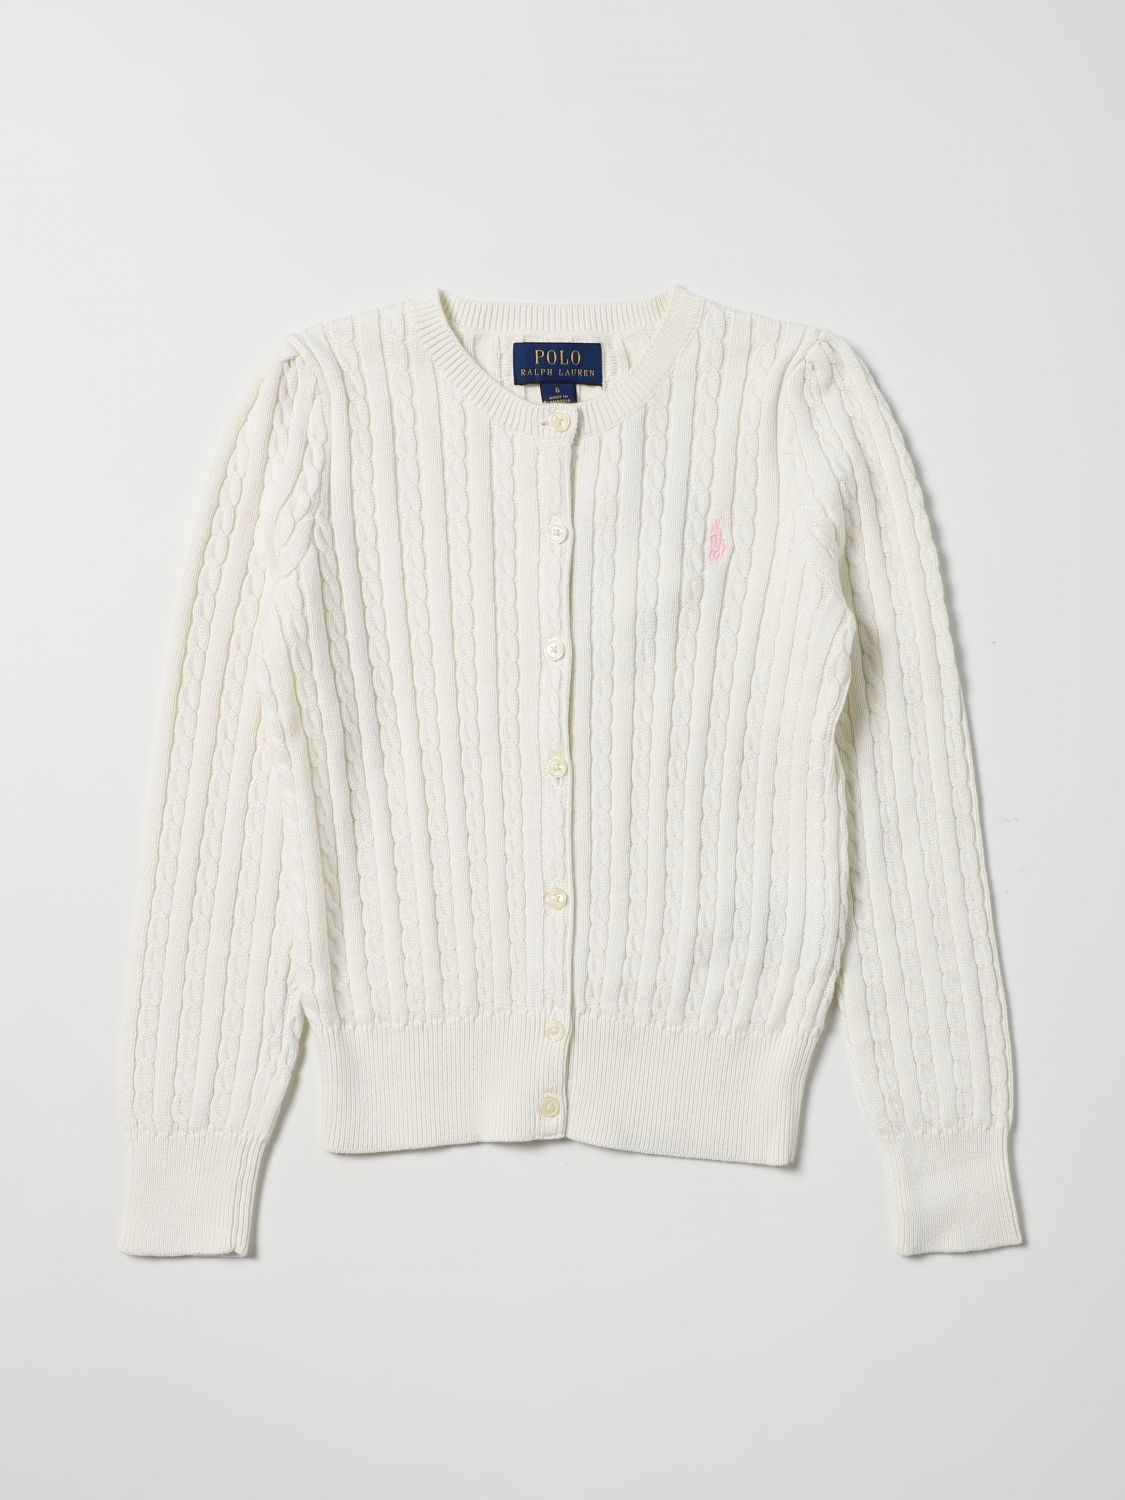 POLO RALPH LAUREN: sweater for girls - White | Polo Ralph Lauren sweater  312543047 online on 